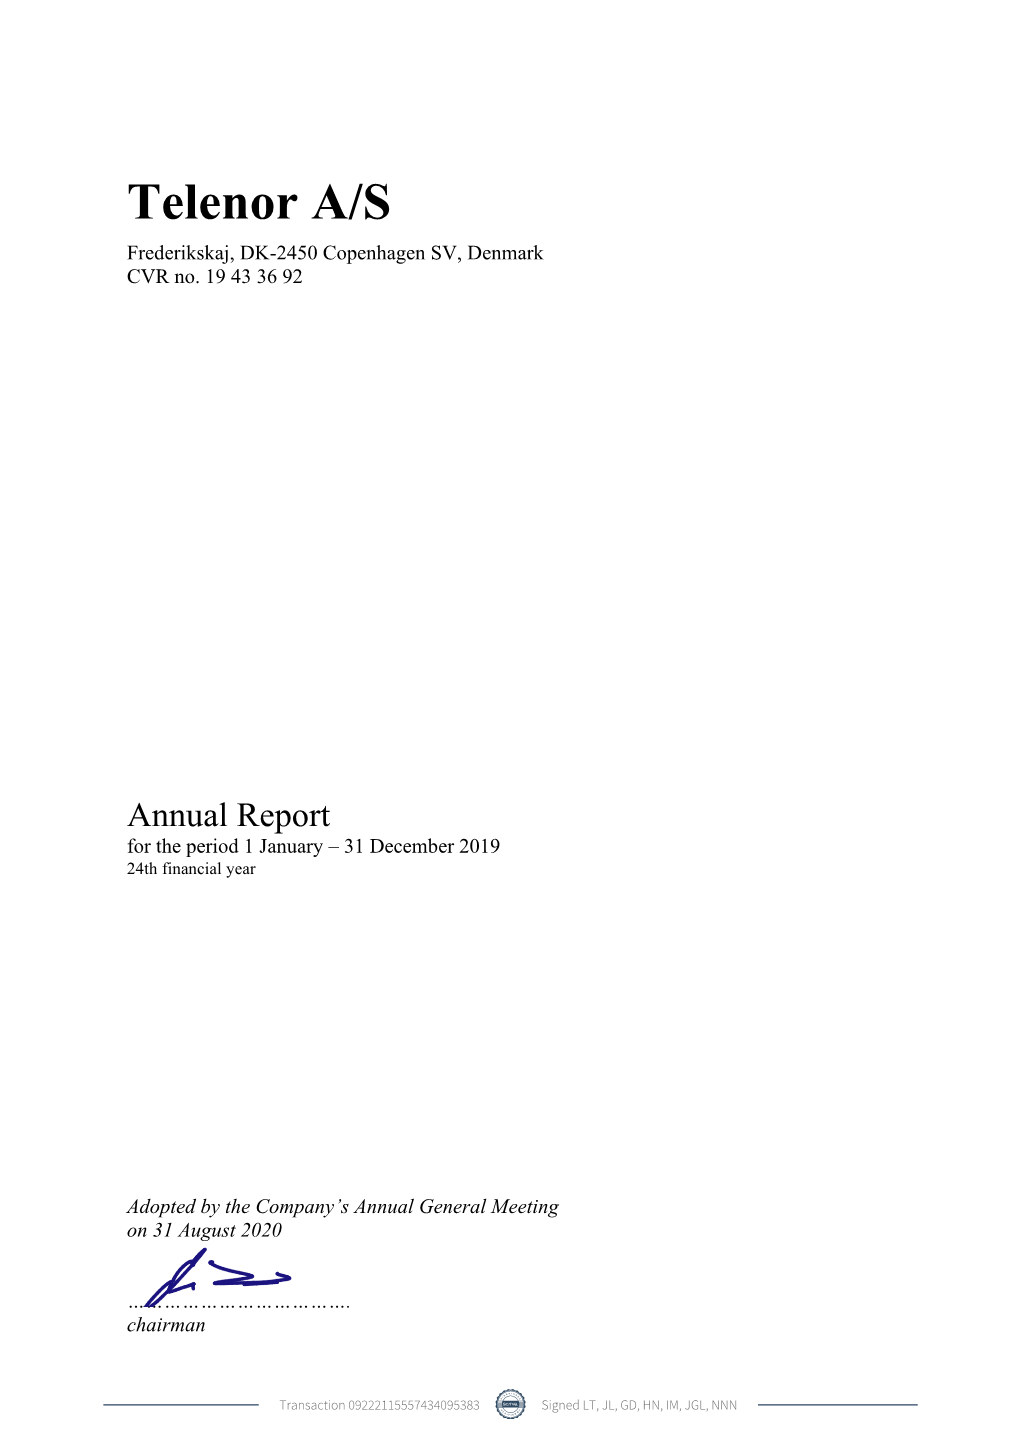 Telenor AS Annual Report 2019 28-08-2020